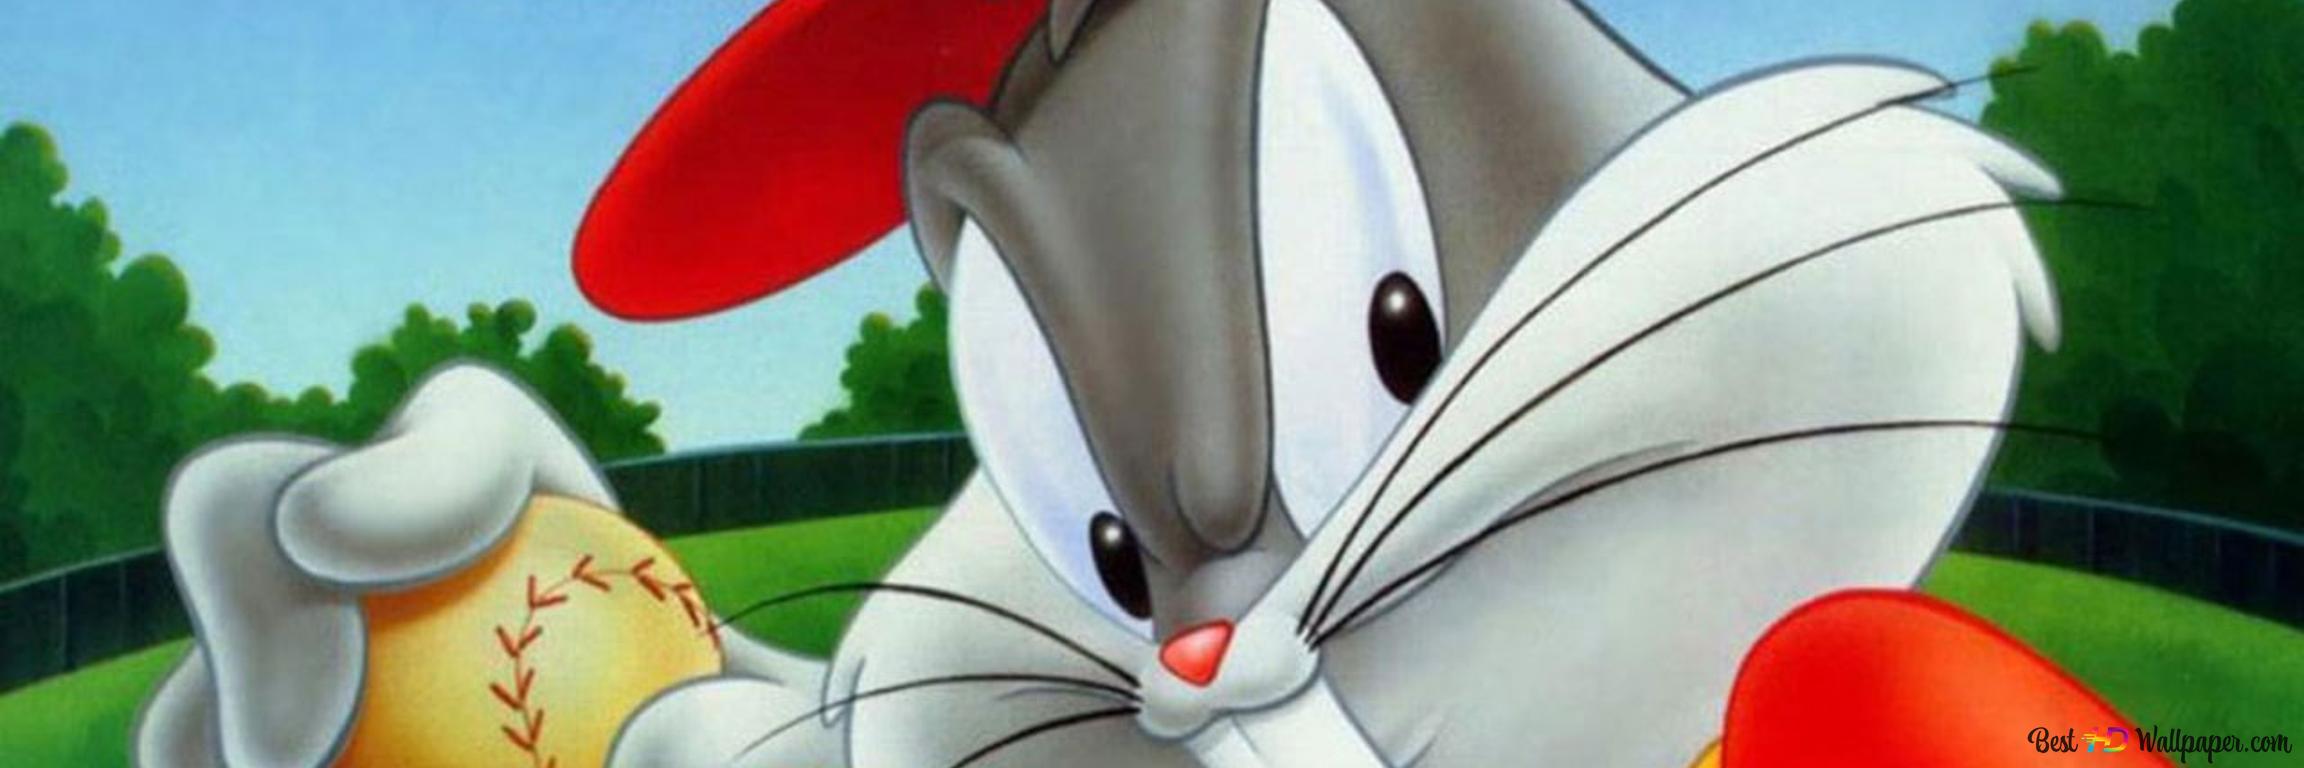 Bugs bunny beyzball 2K wallpaper download